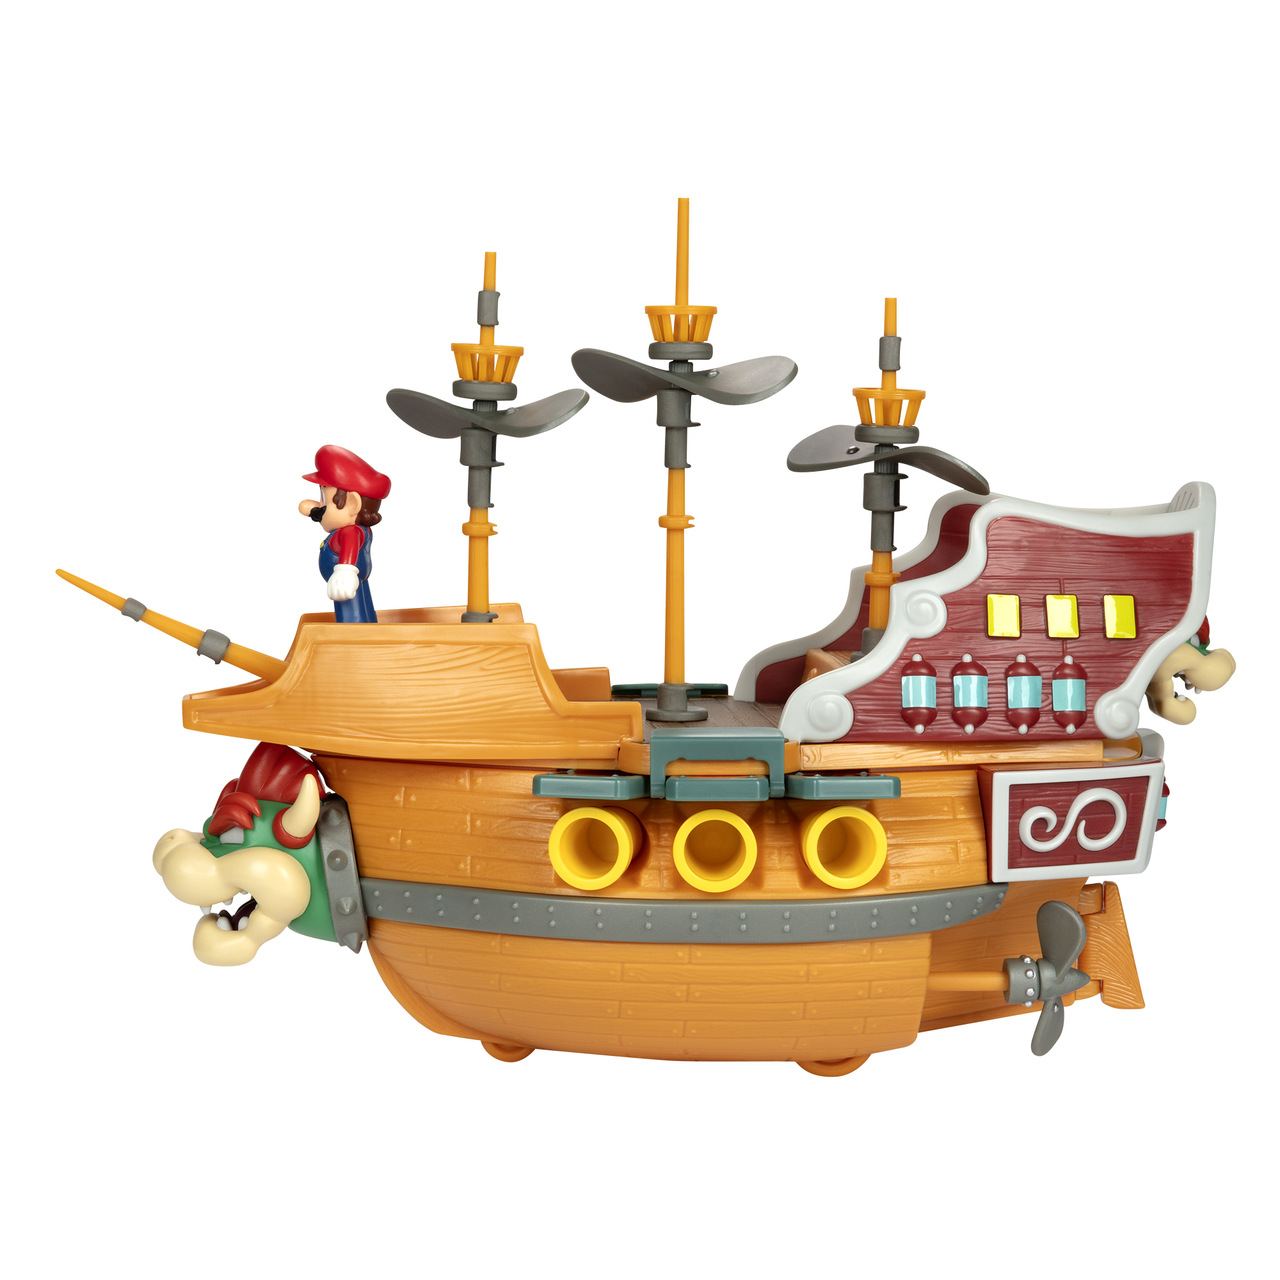 Brinquedo Diorama Cenario Navio Voador Do Bowser Airship Playset Deluxe: Super Mario World - Jakks Pacific